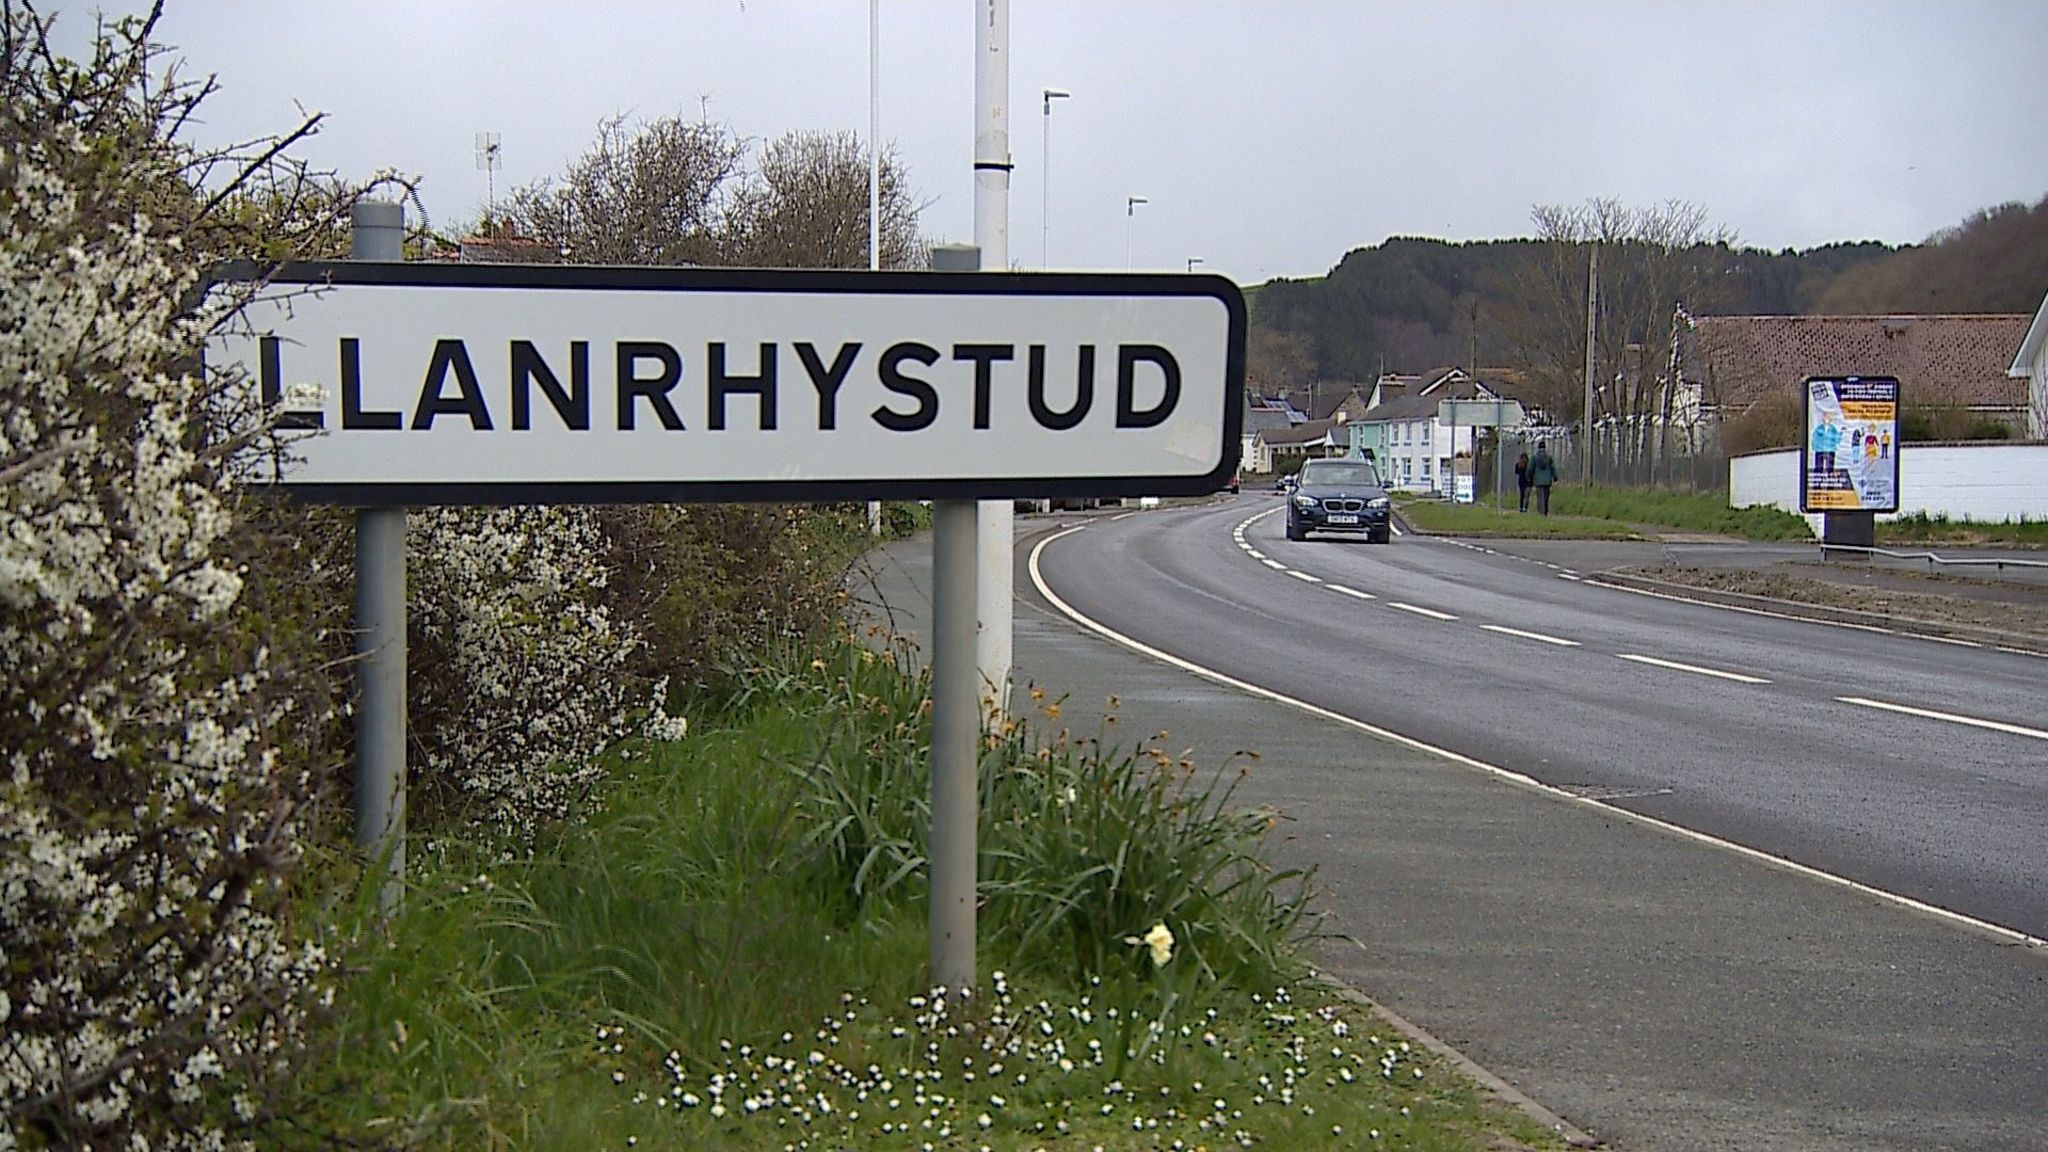 Llanrhystud road sign